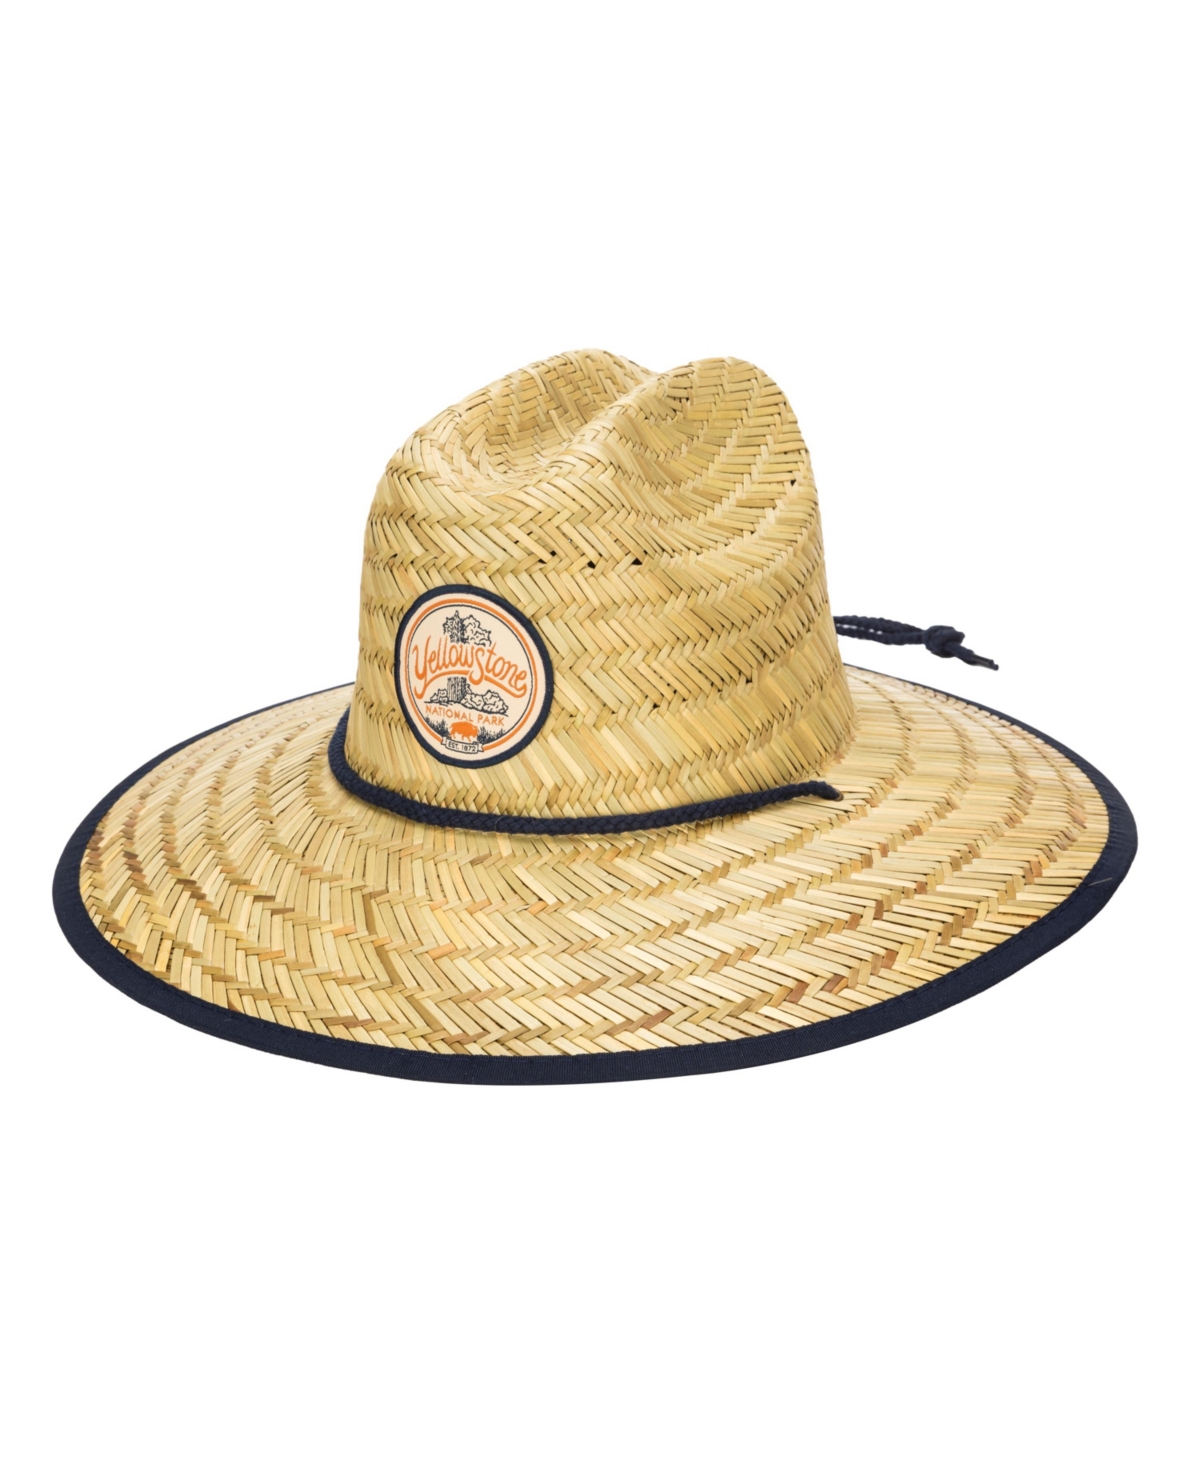 Men's Straw Lifeguard Sun Hat - Yellowstone